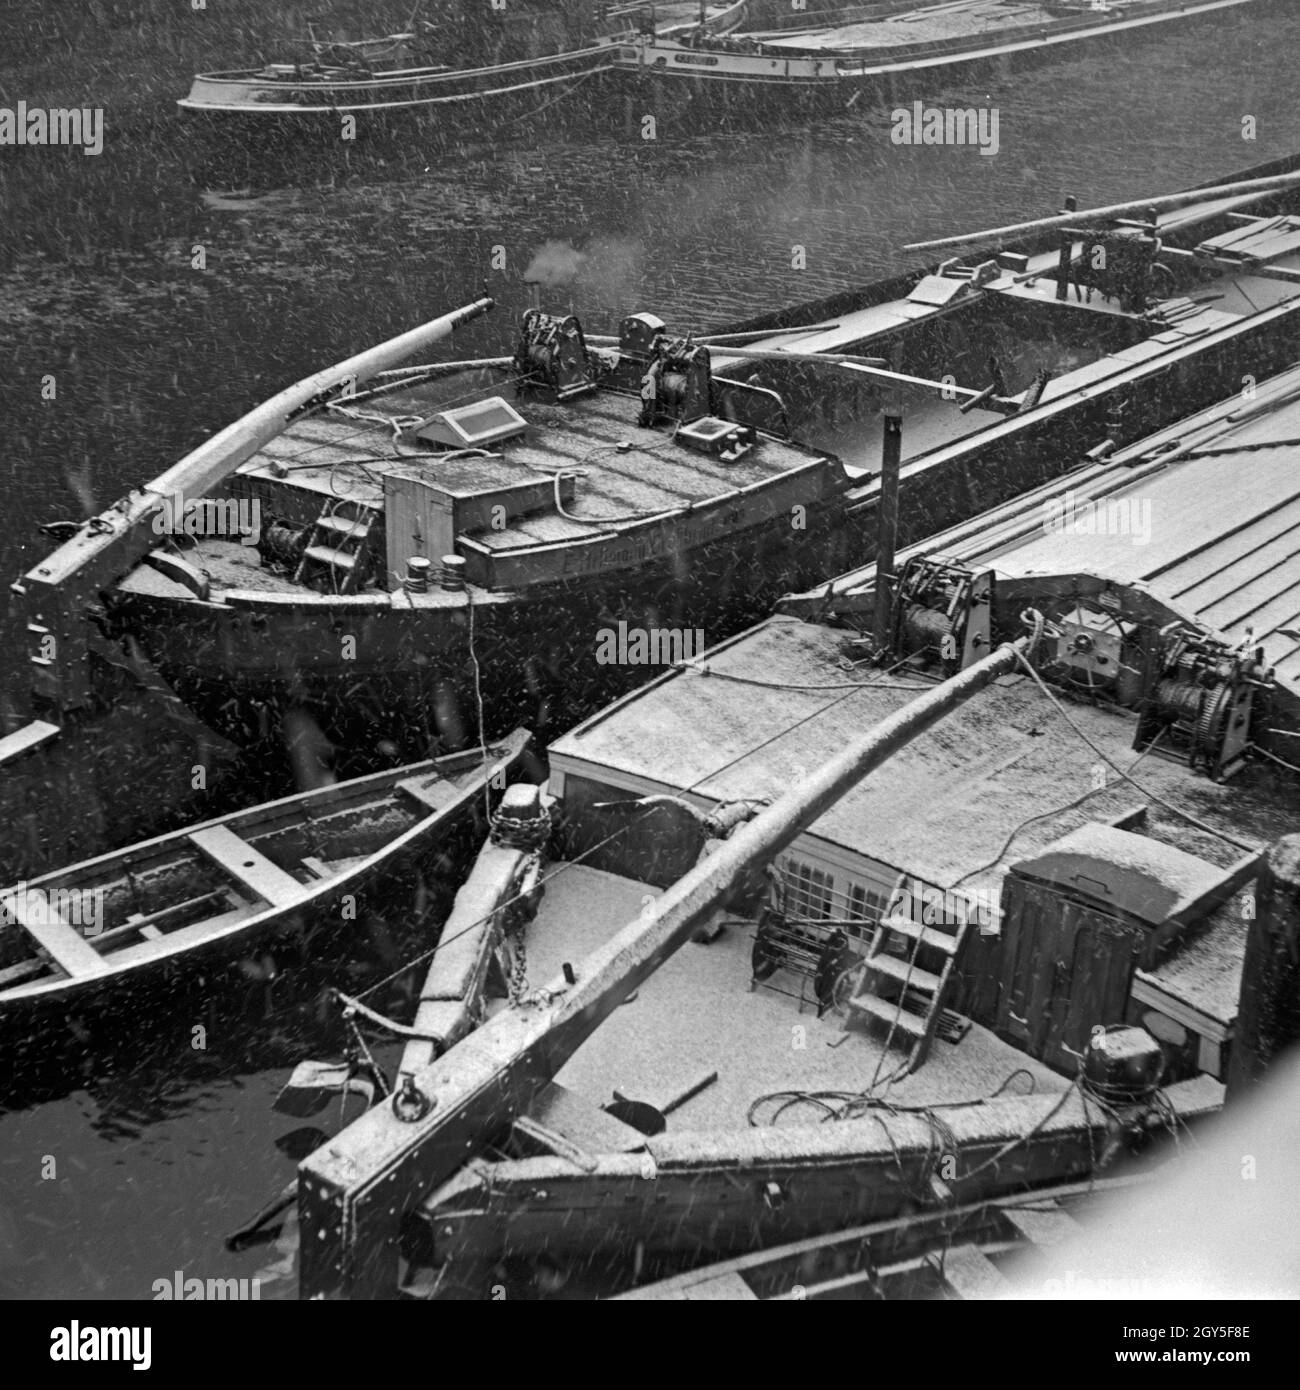 Kähne auf der Spree im Schneetreiben, Deutschland 1930 er Jahre. Barges sur la rivière Spree dans la neige, l'Allemagne des années 1930. Banque D'Images